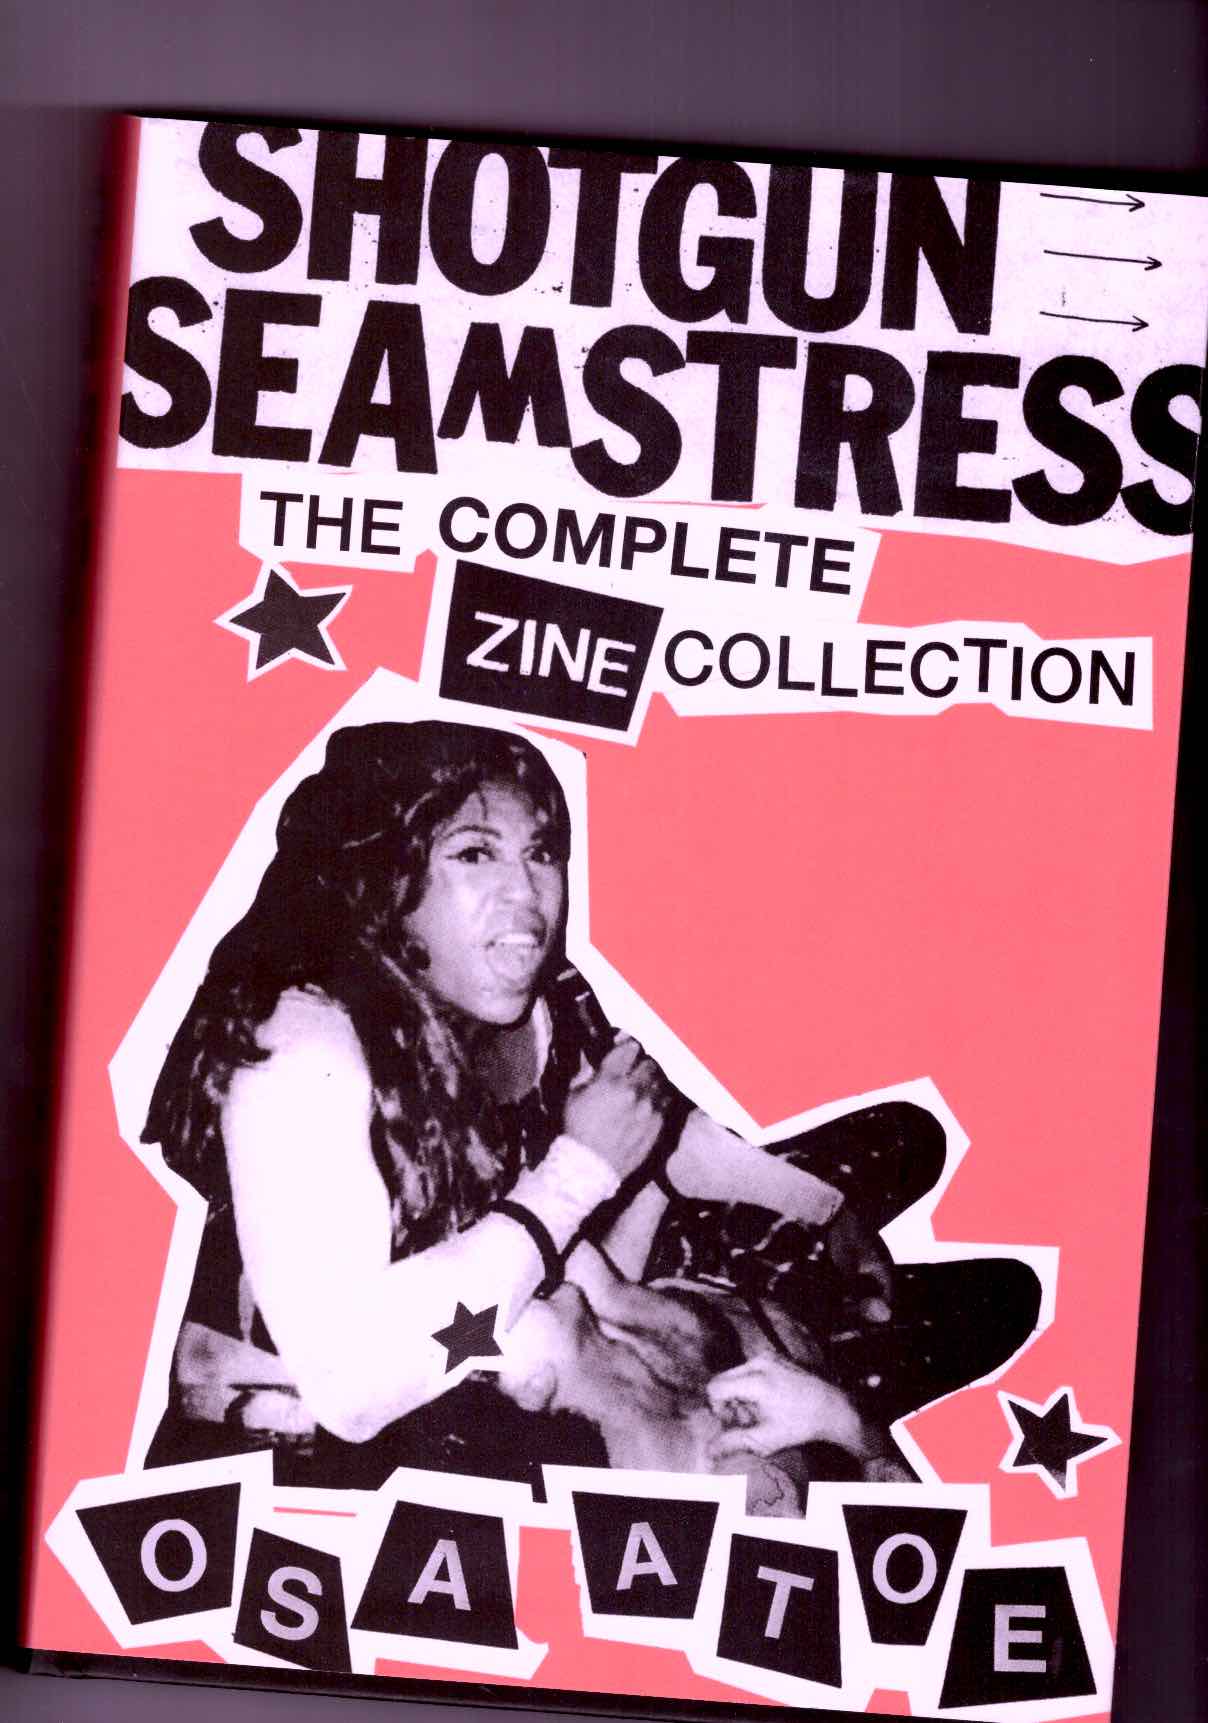 ATOE, Osa - Shotgun Seamstress: The Complete Zine Collection